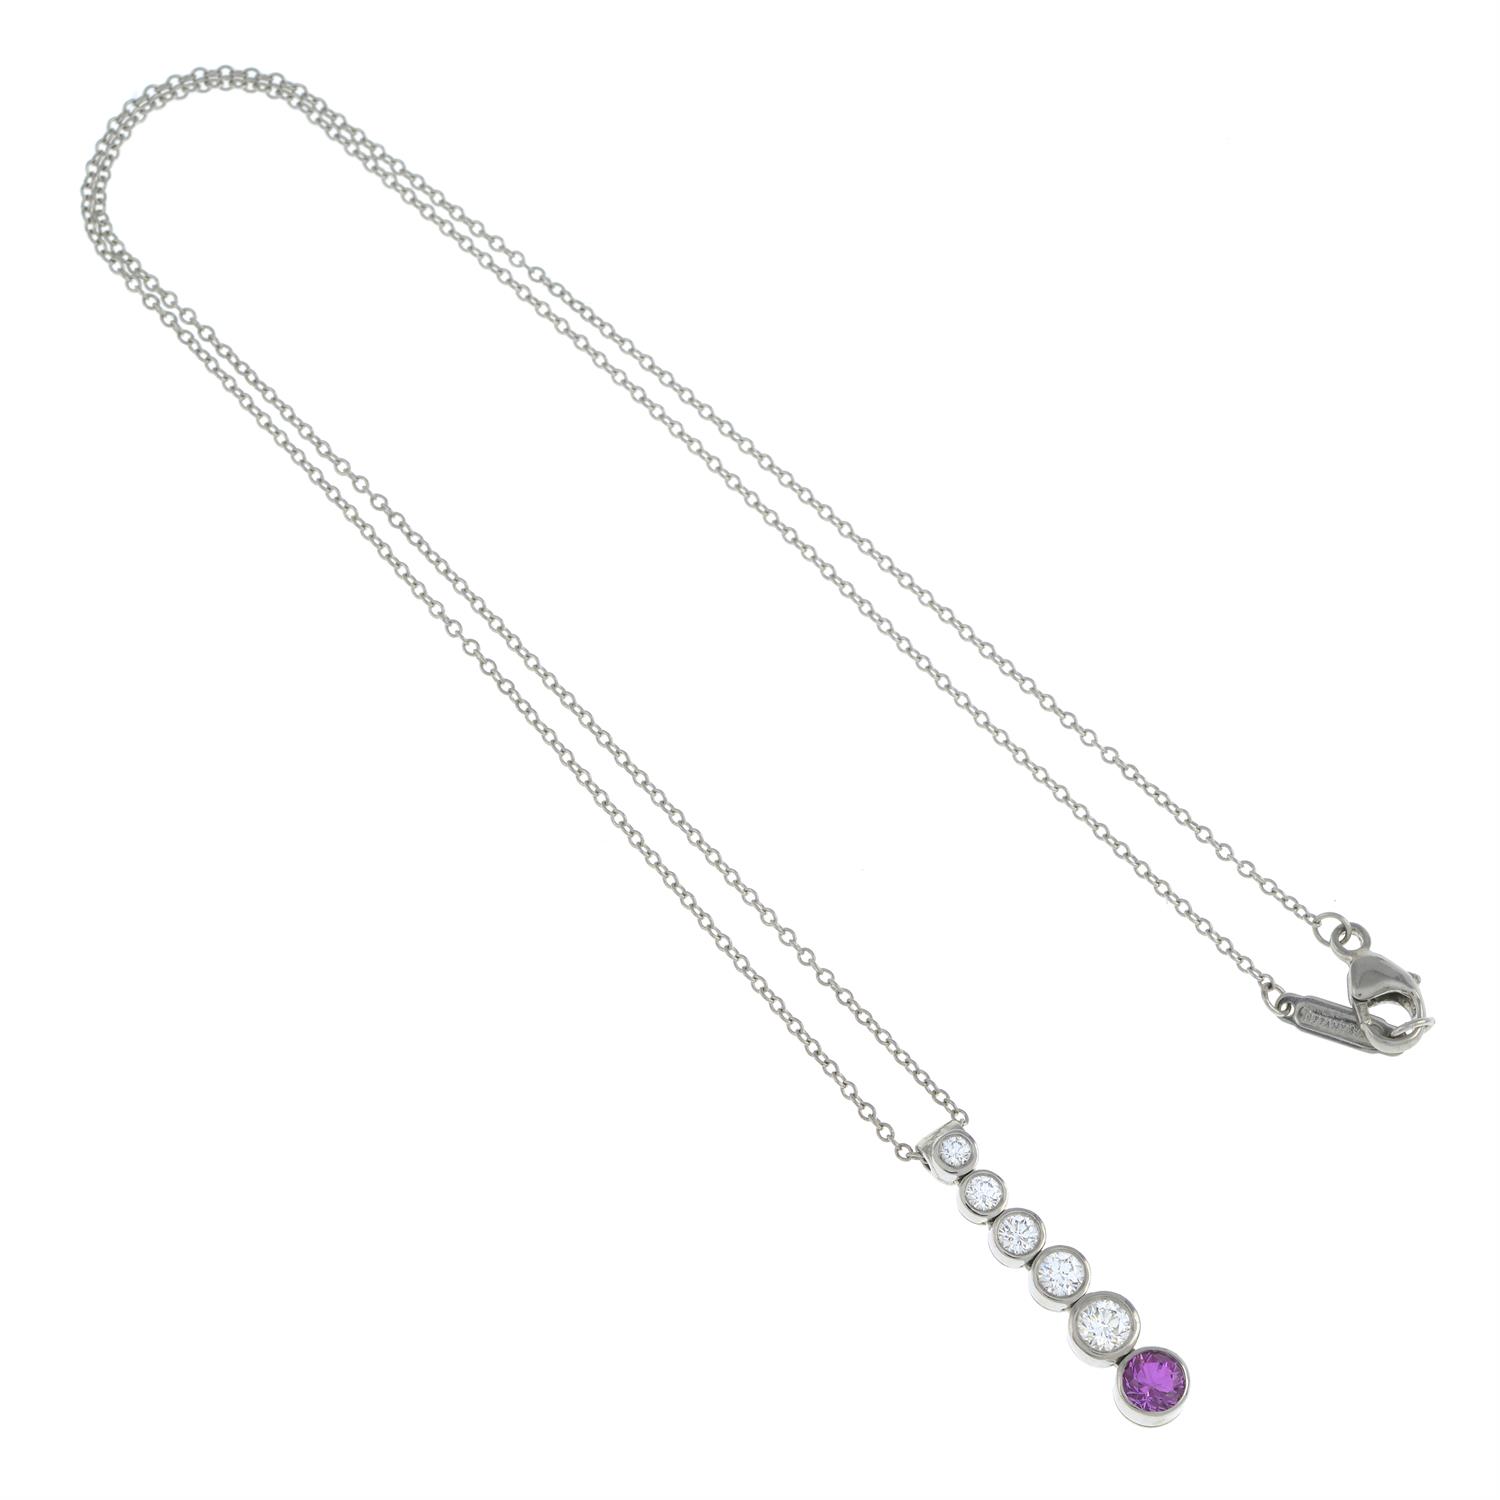 Diamond and gem 'Jazz' pendant, by Tiffany & Co. - Image 4 of 4